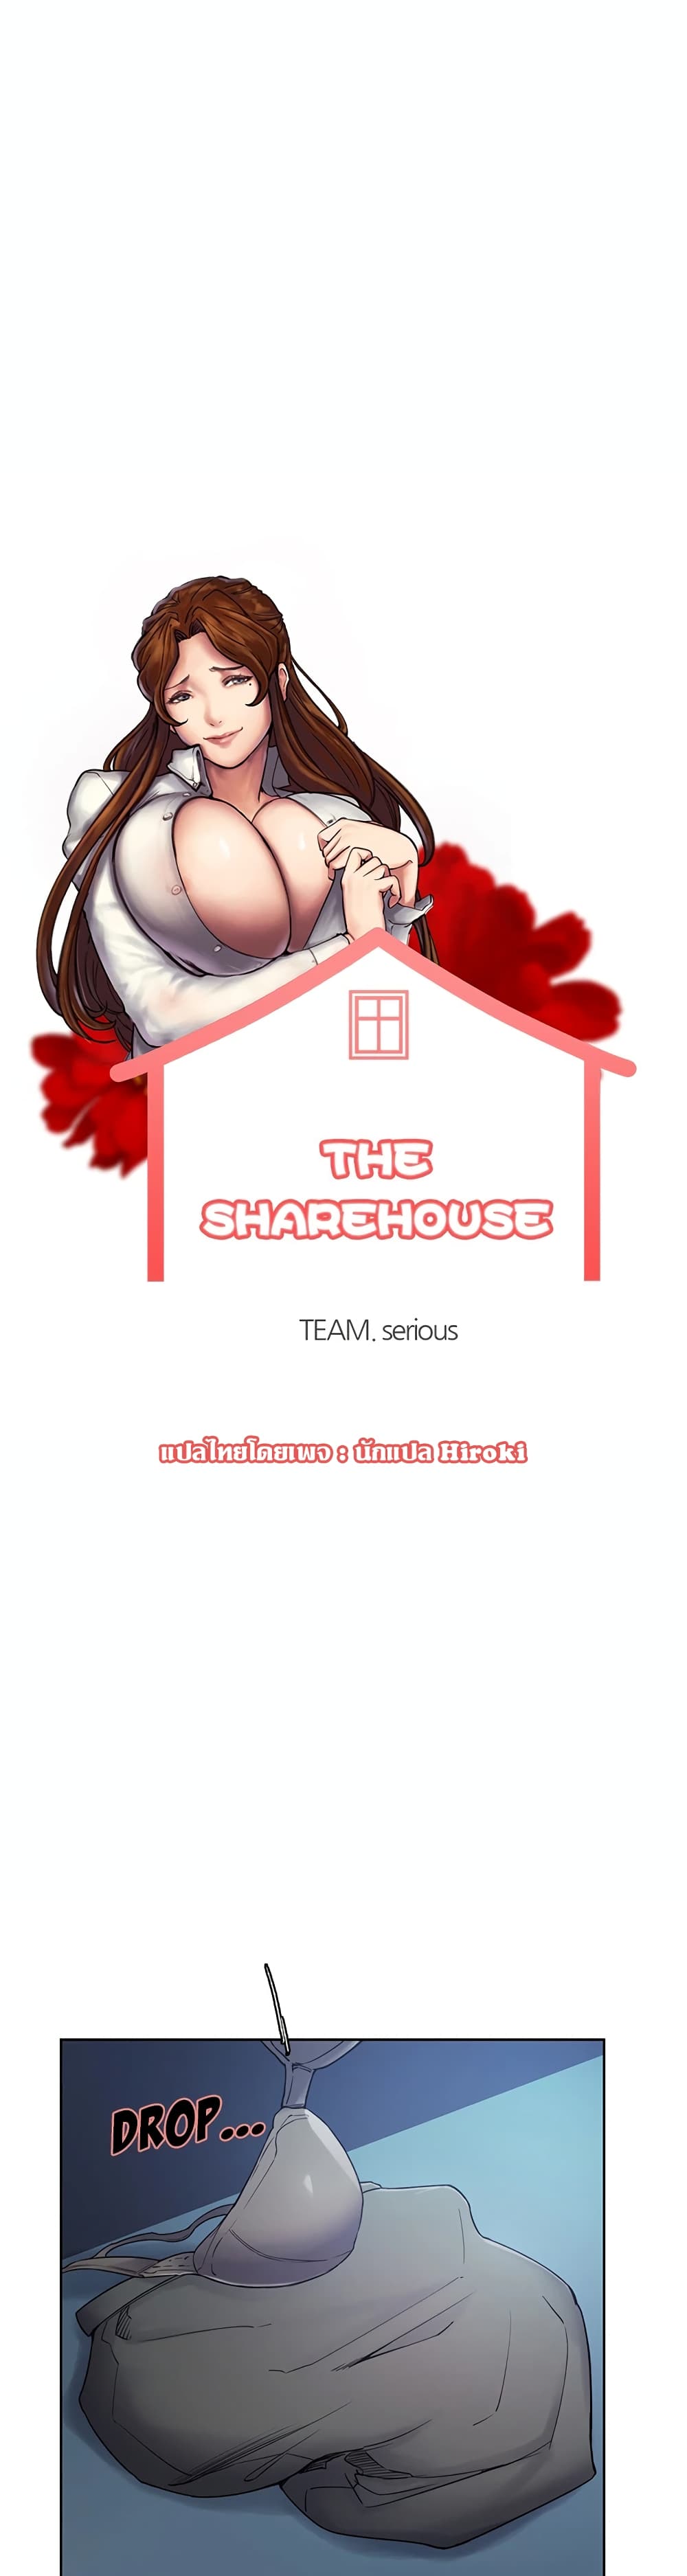 The Sharehouse 43-43